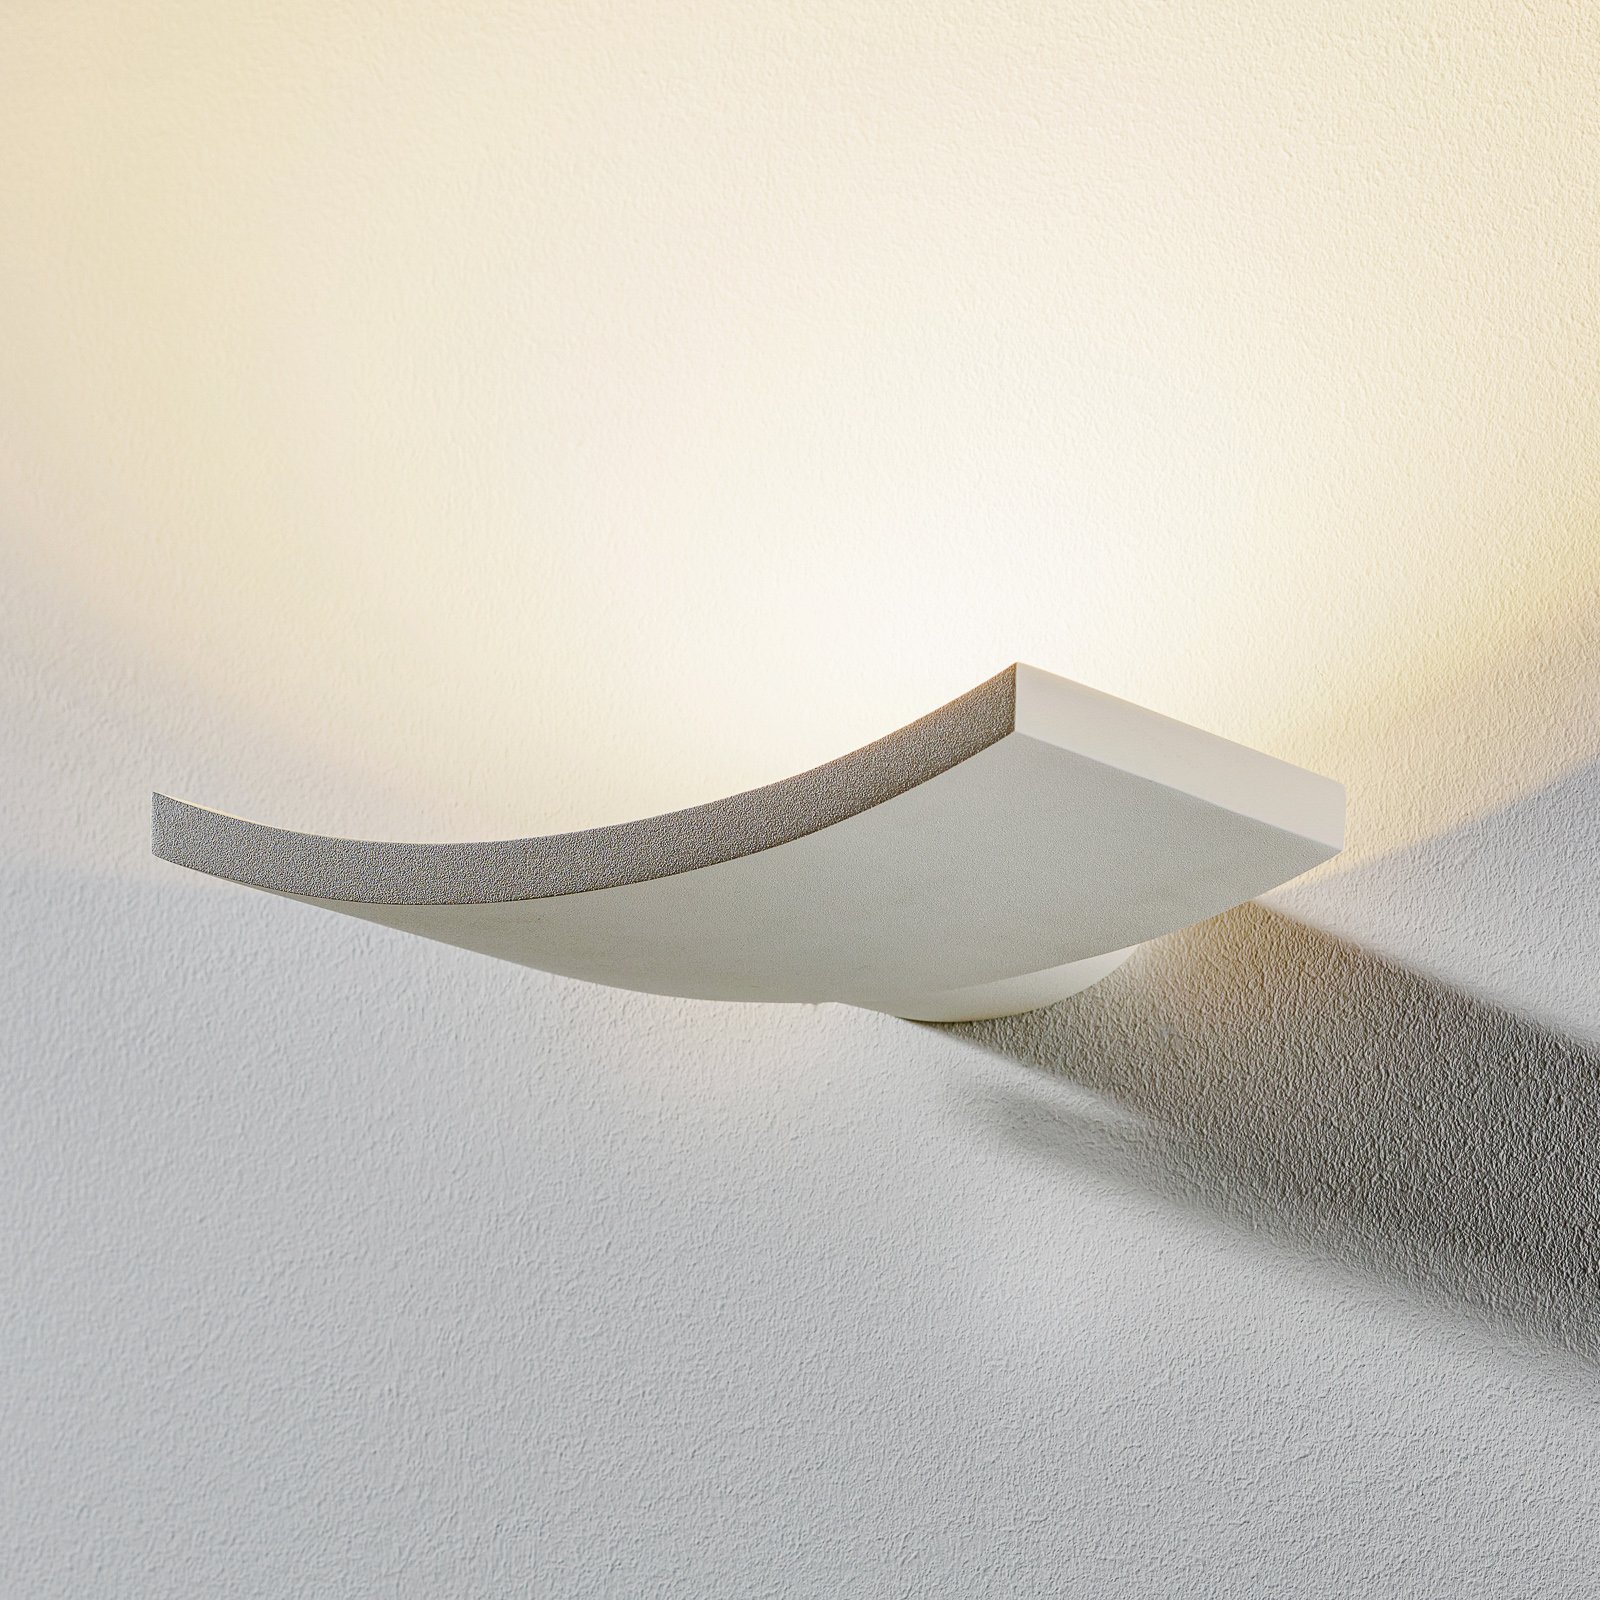 Artemide Microsurf LED-vegglampe